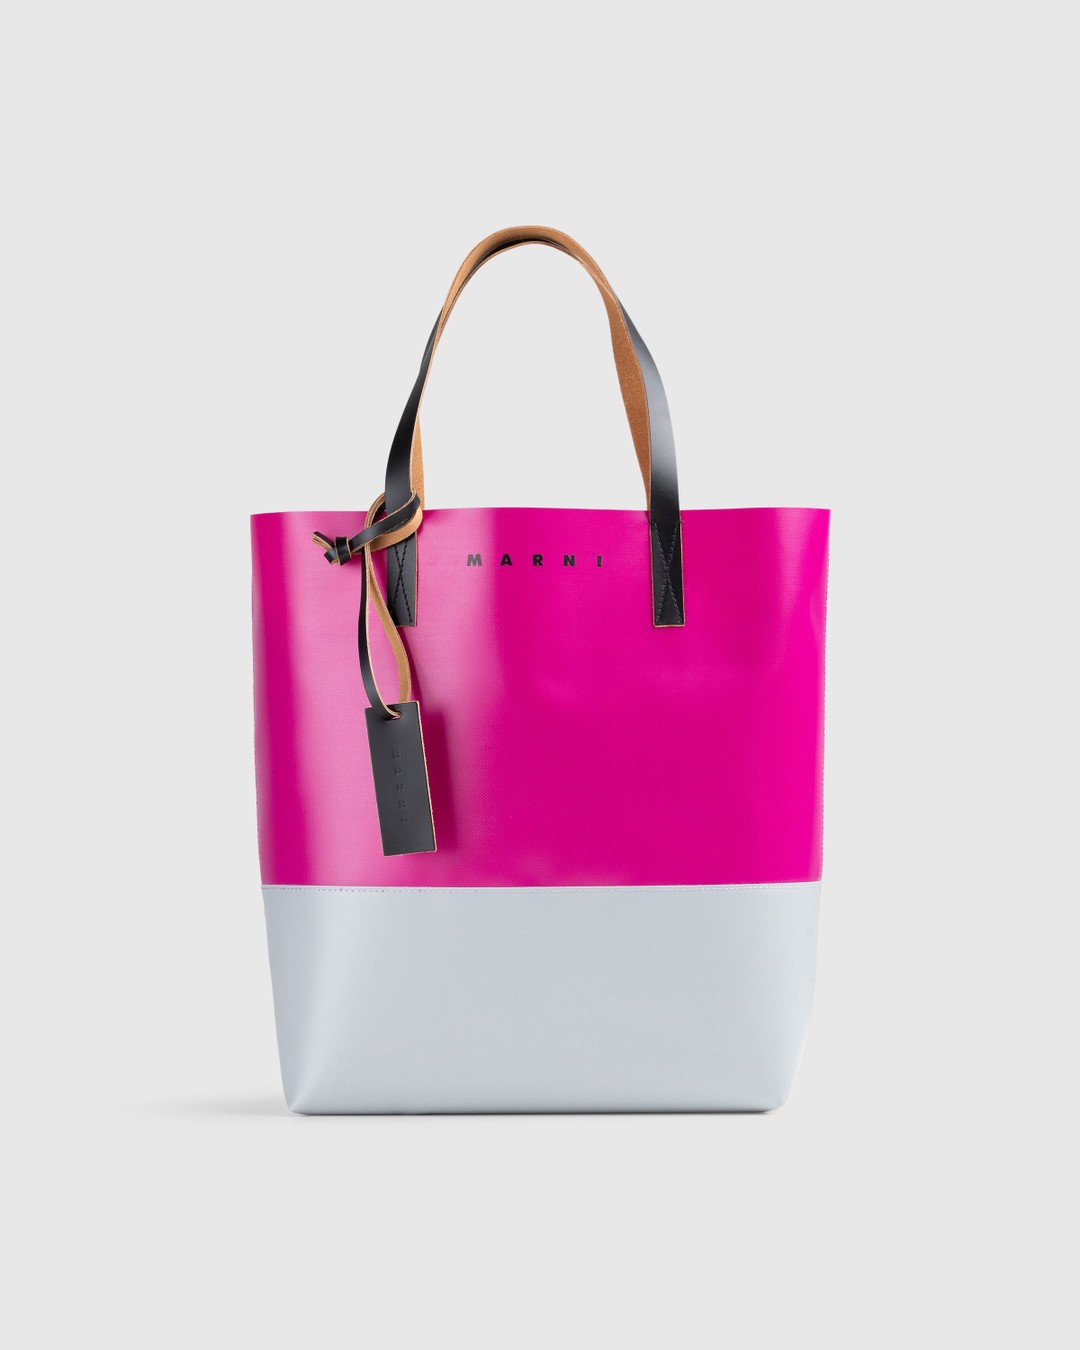 Marni – Tribeca Two-Tone Shopping Bag Pink/Grey - Bags - Pink - Image 1